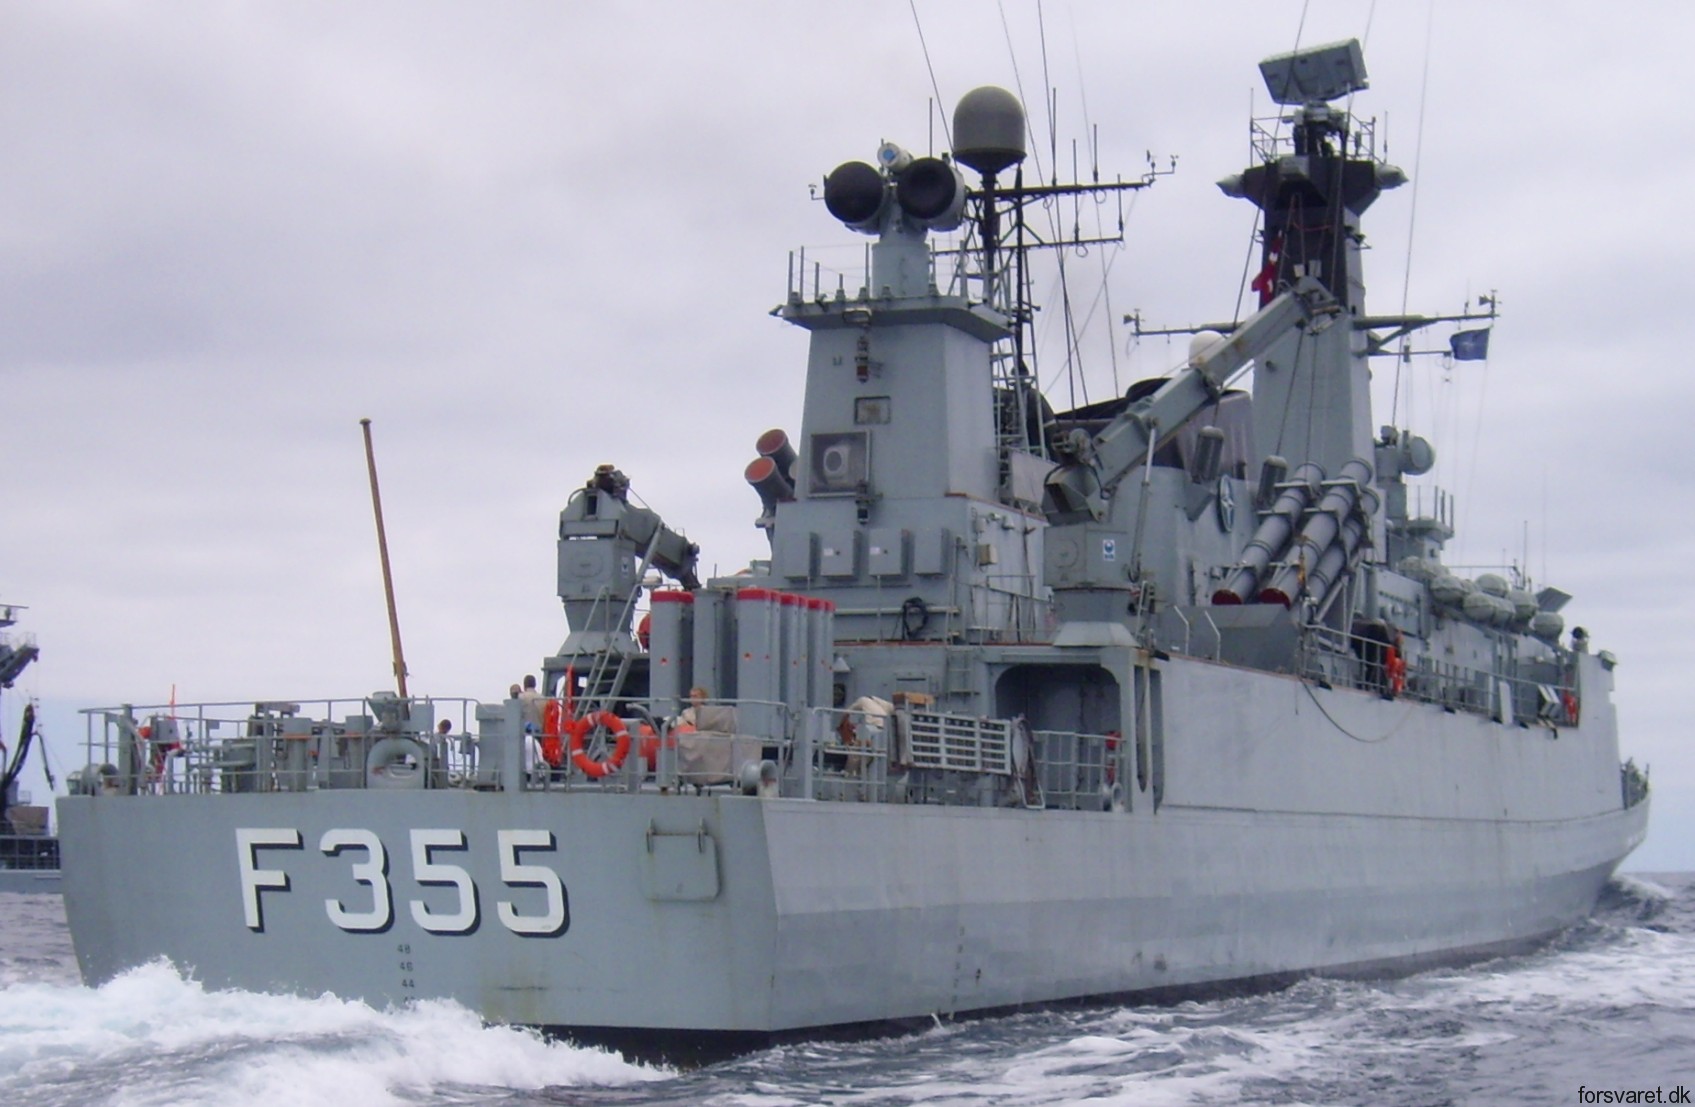 f-355 hdms olfert fischer niels juel class corvette royal danish navy rdn kongelige danske marine kdm 52